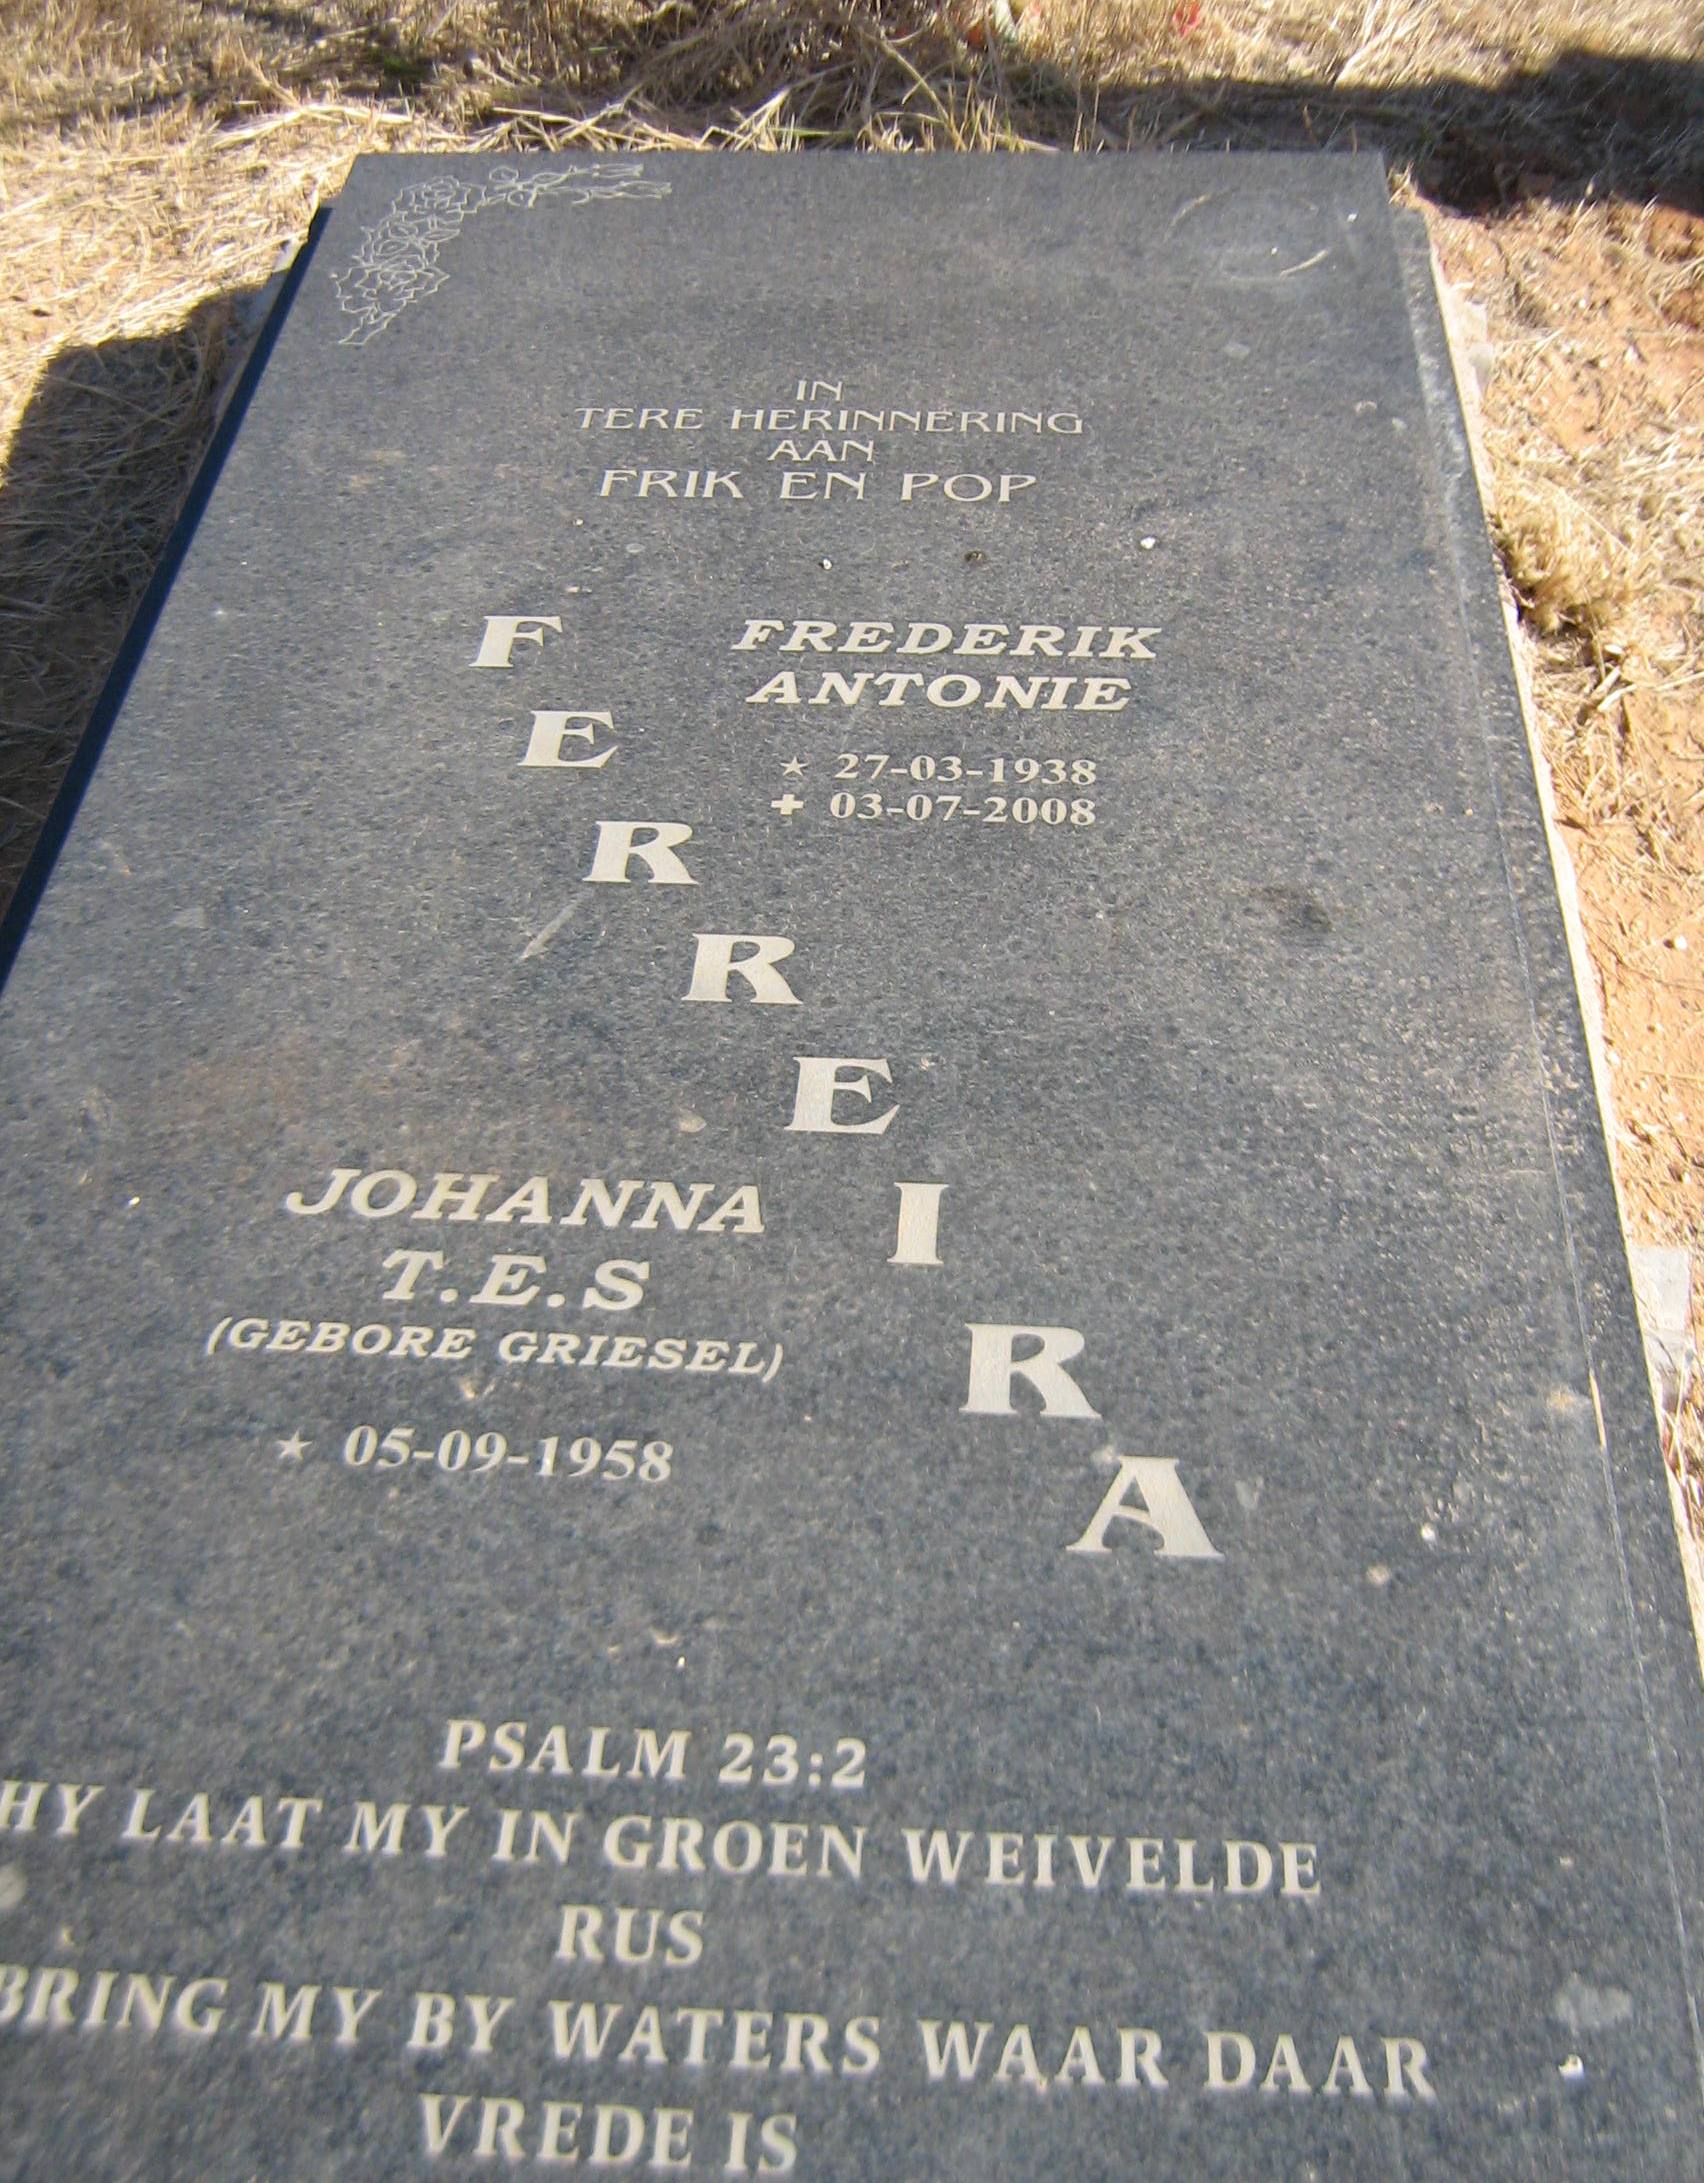 FERREIRA Frederik Antonie 1938-2008 & Johanna T.E.S. GRIESEL 1958-